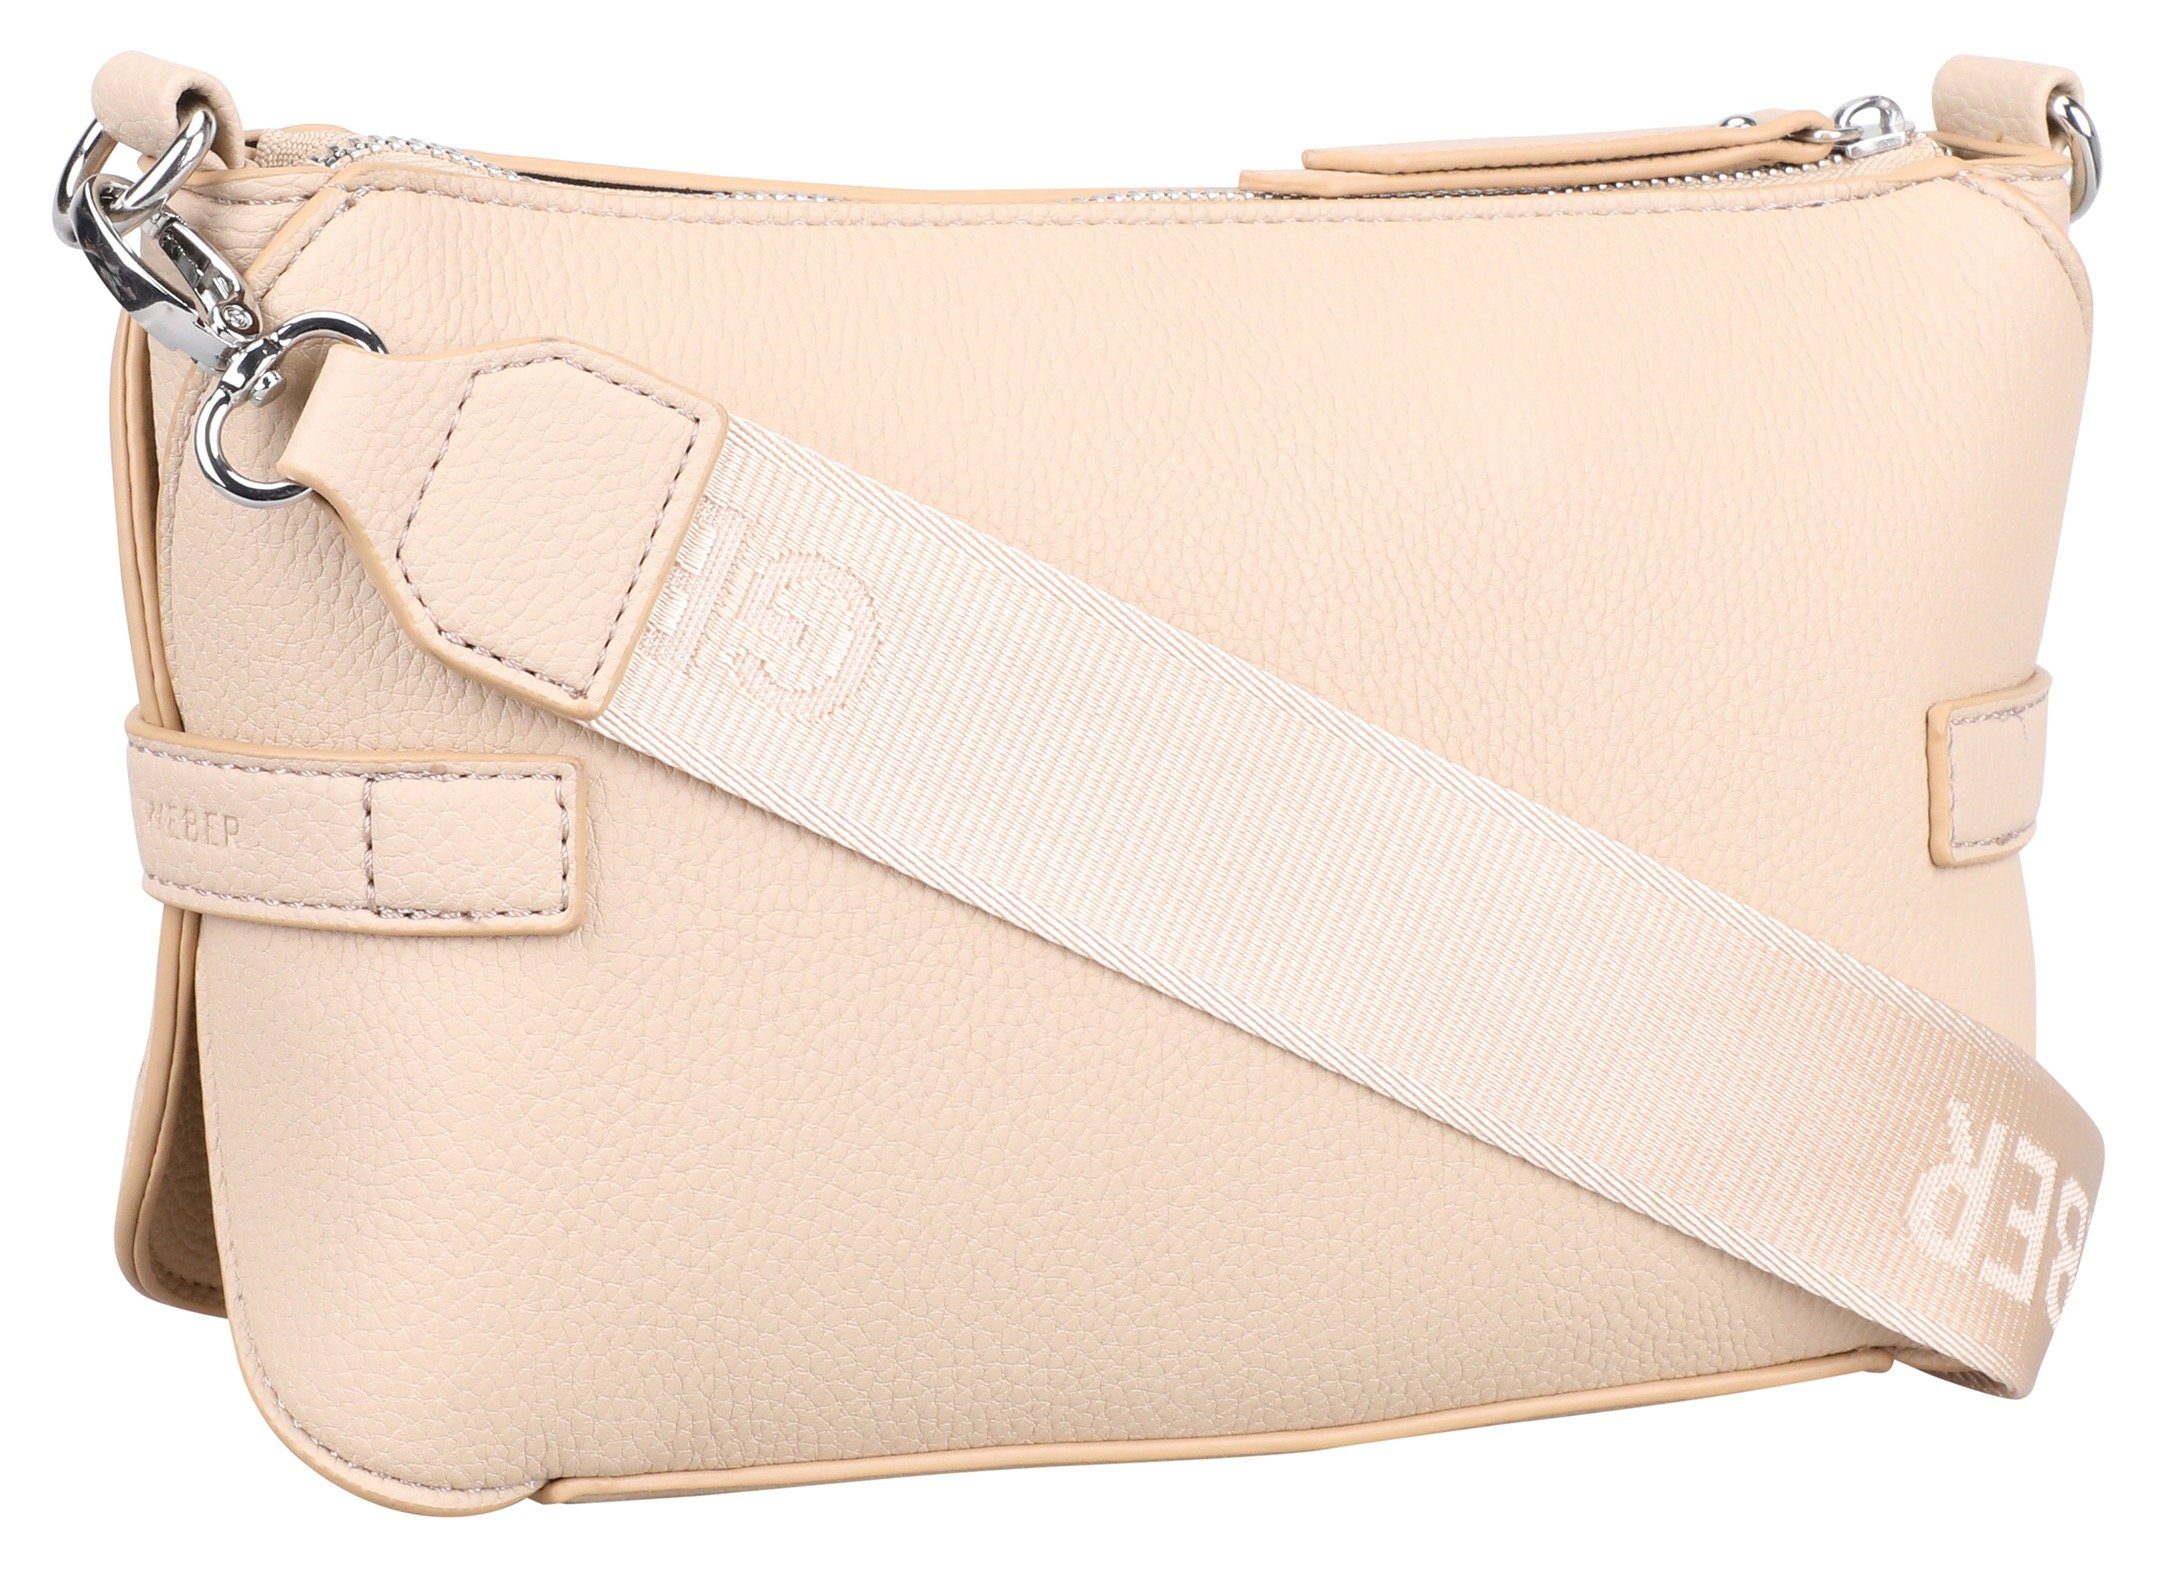 Damen Umhängetaschen GERRY WEBER Bags Umhängetasche summertime shoulderbag shz, mit modischen Cut outs im Material